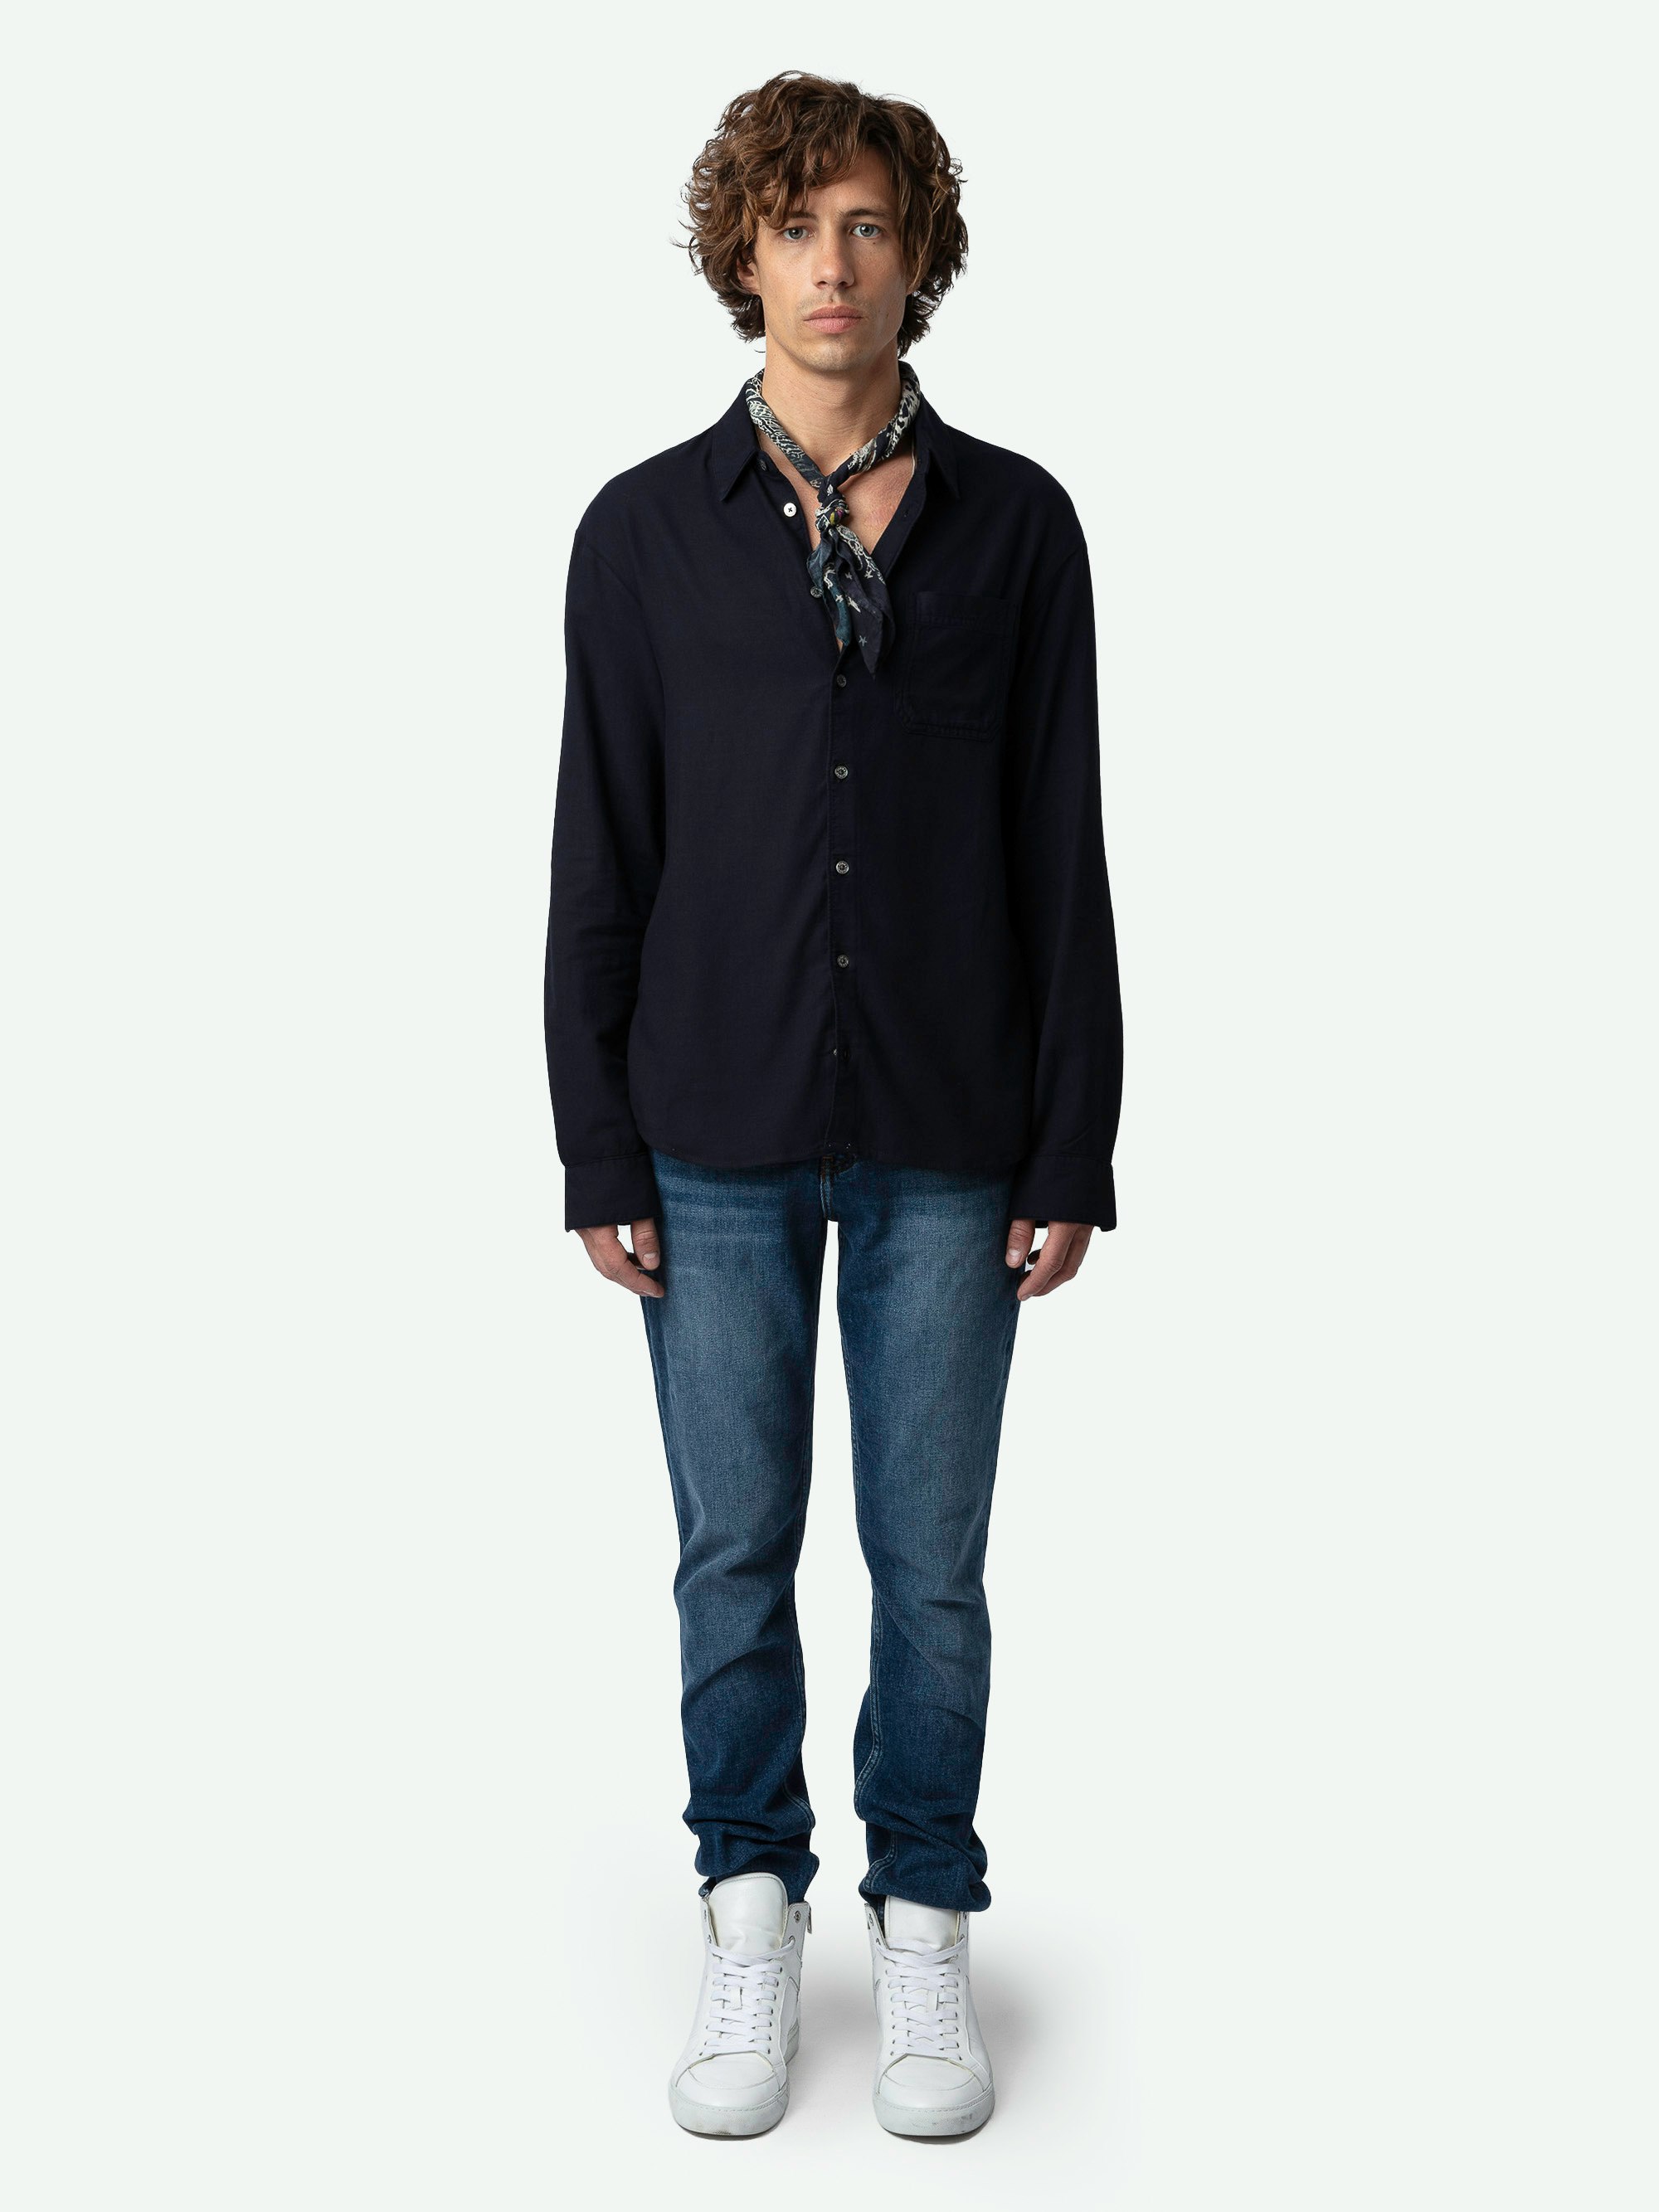 Tyrona Shirt - Long-sleeved navy blue loose shirt with pocket.